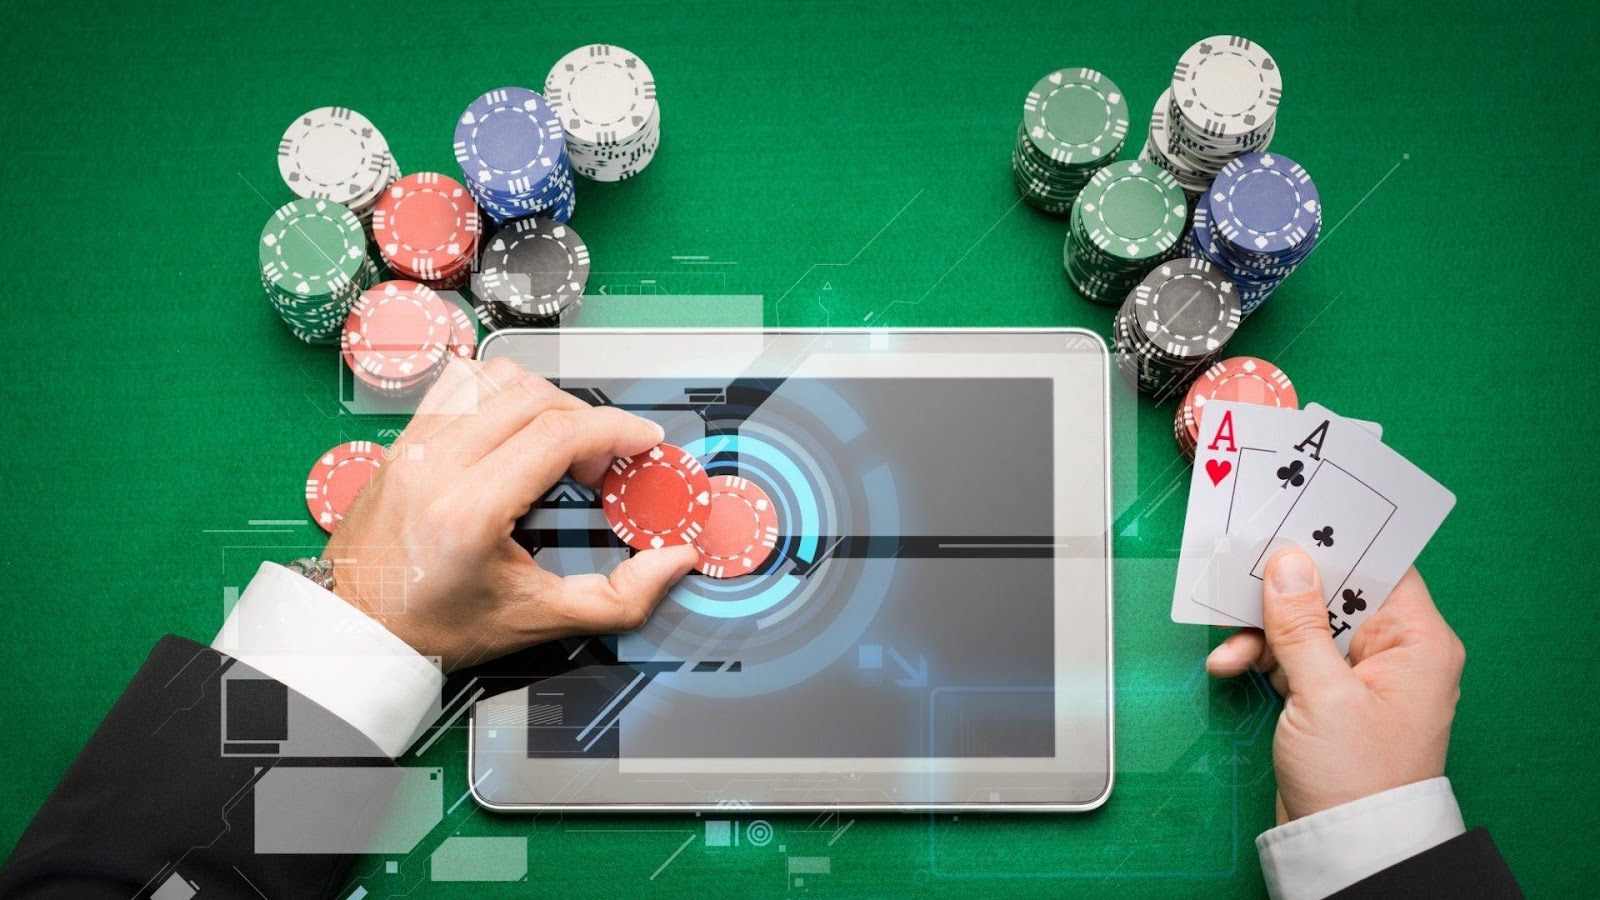 The Indian Online Gambling Market Statistics